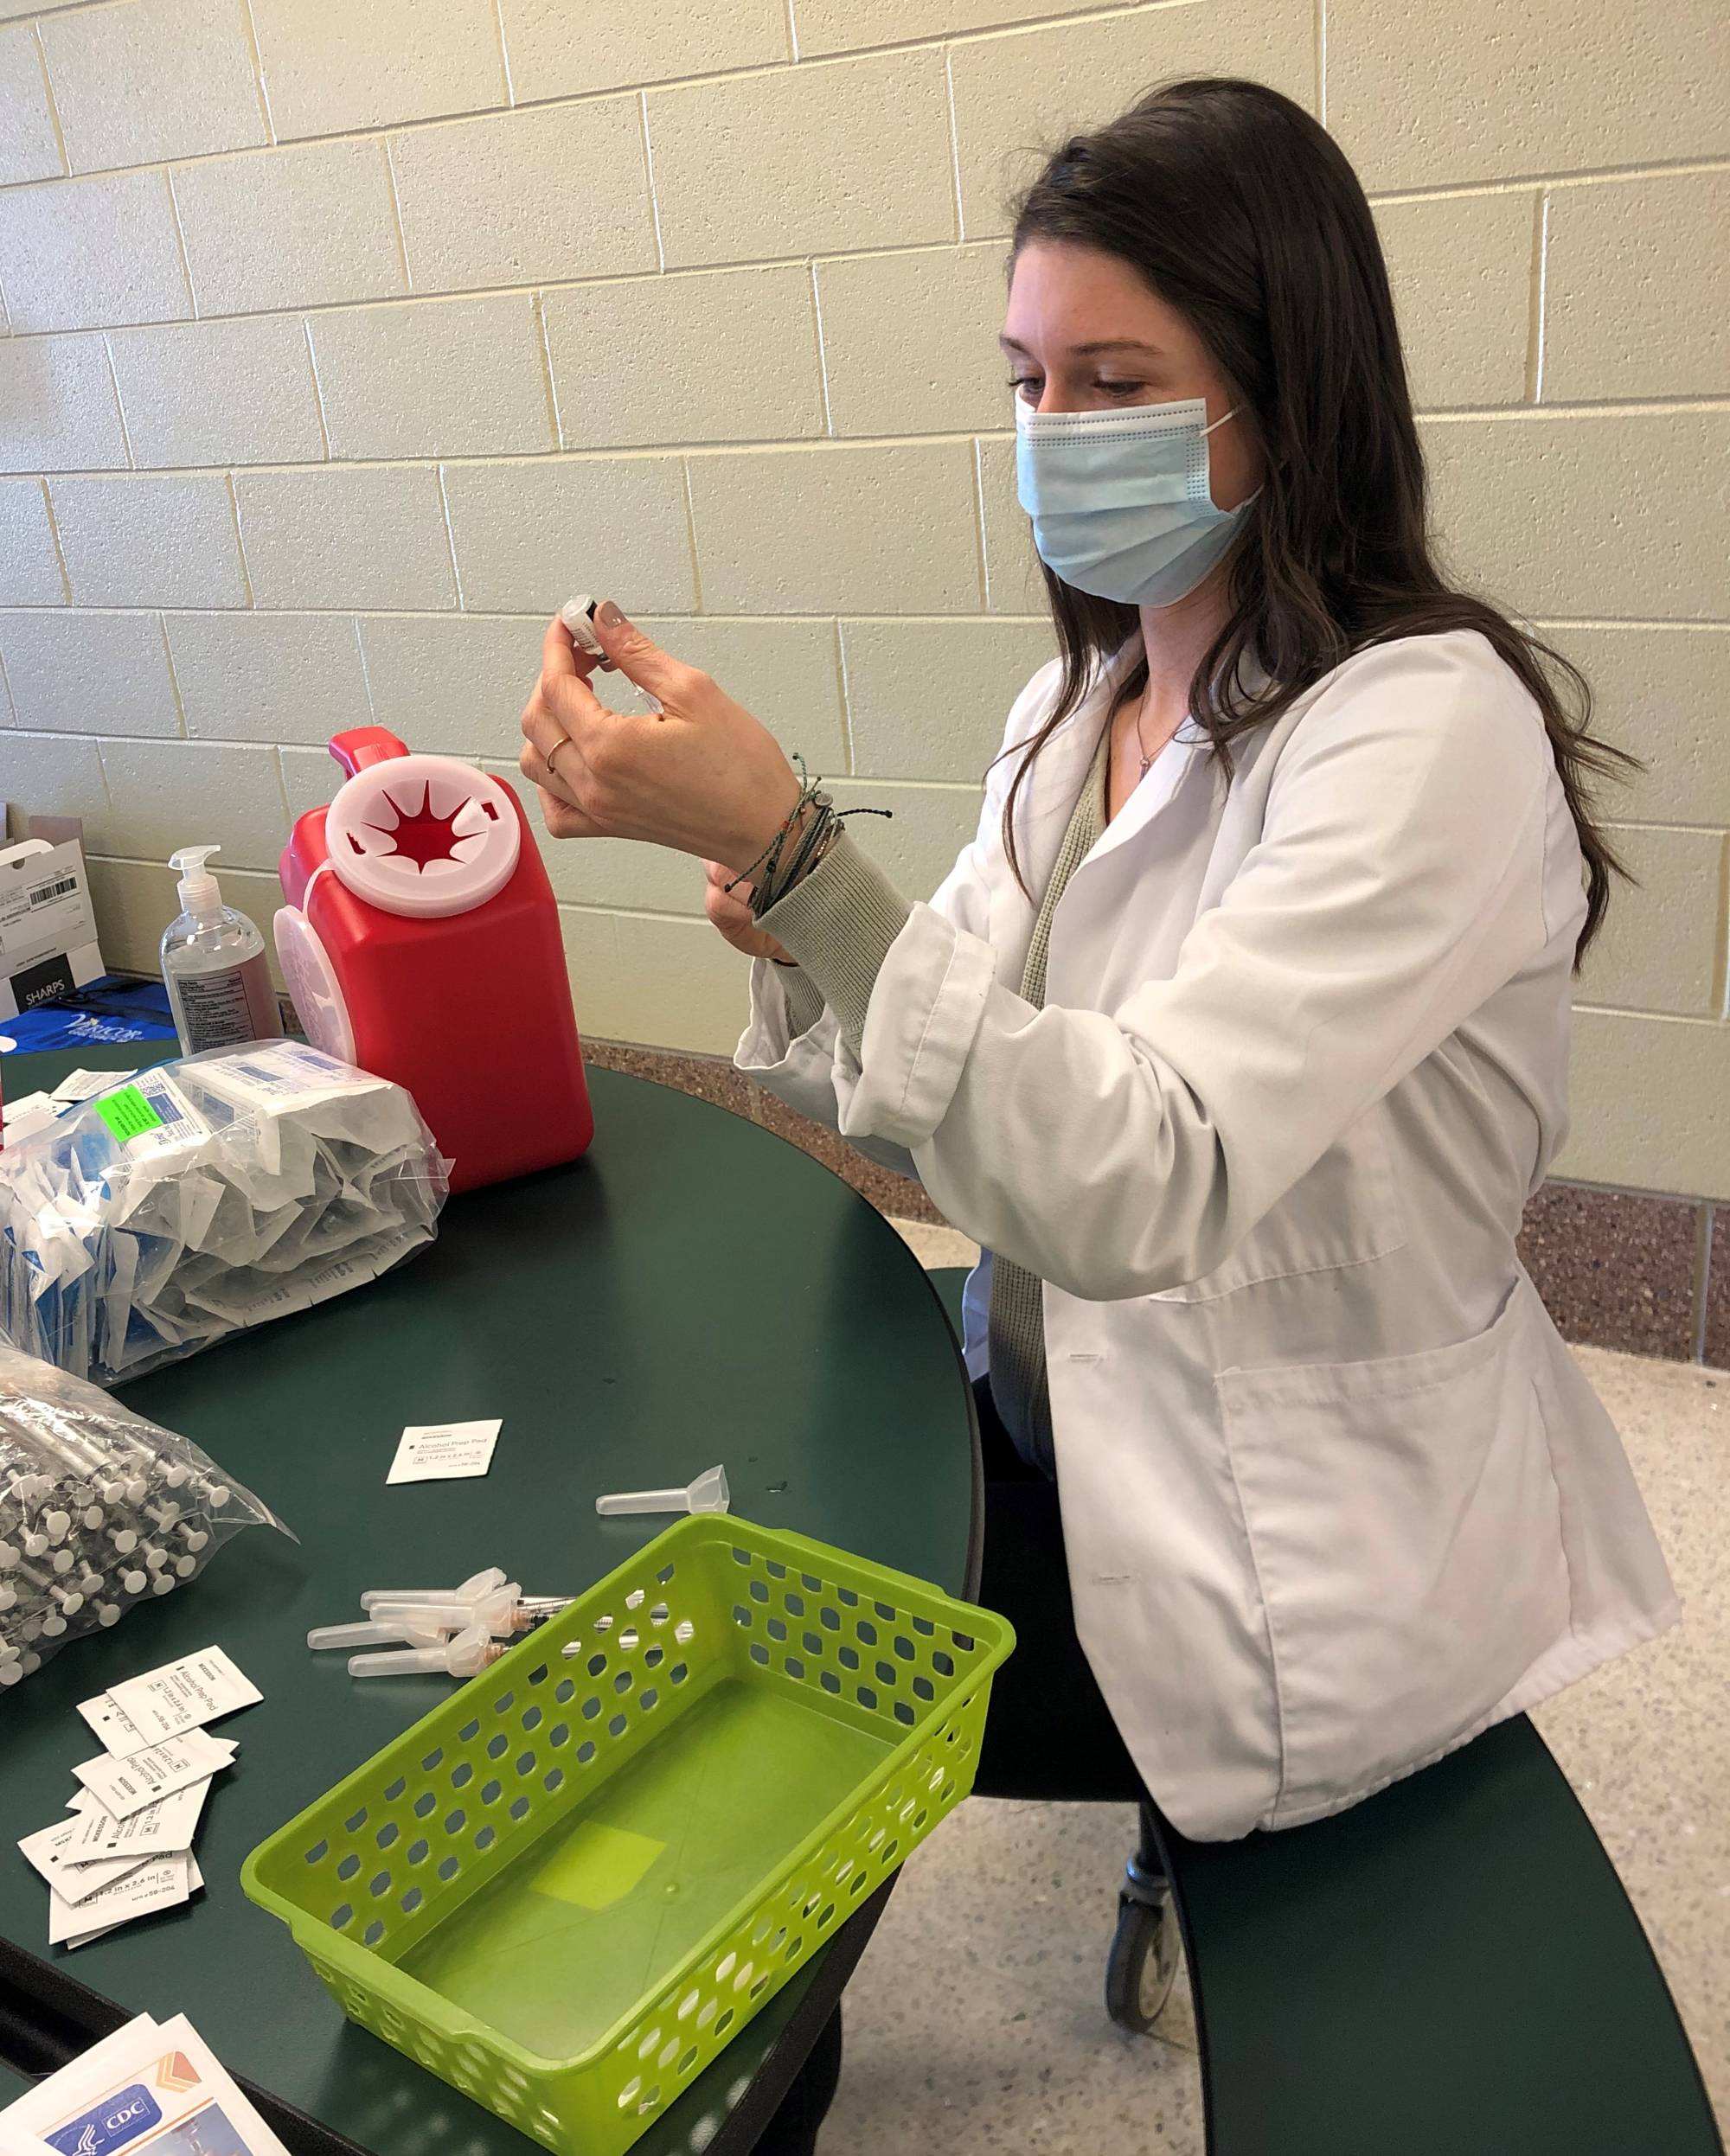 Traverse City GVSU's PA students help administering Covid-19 vaccinations